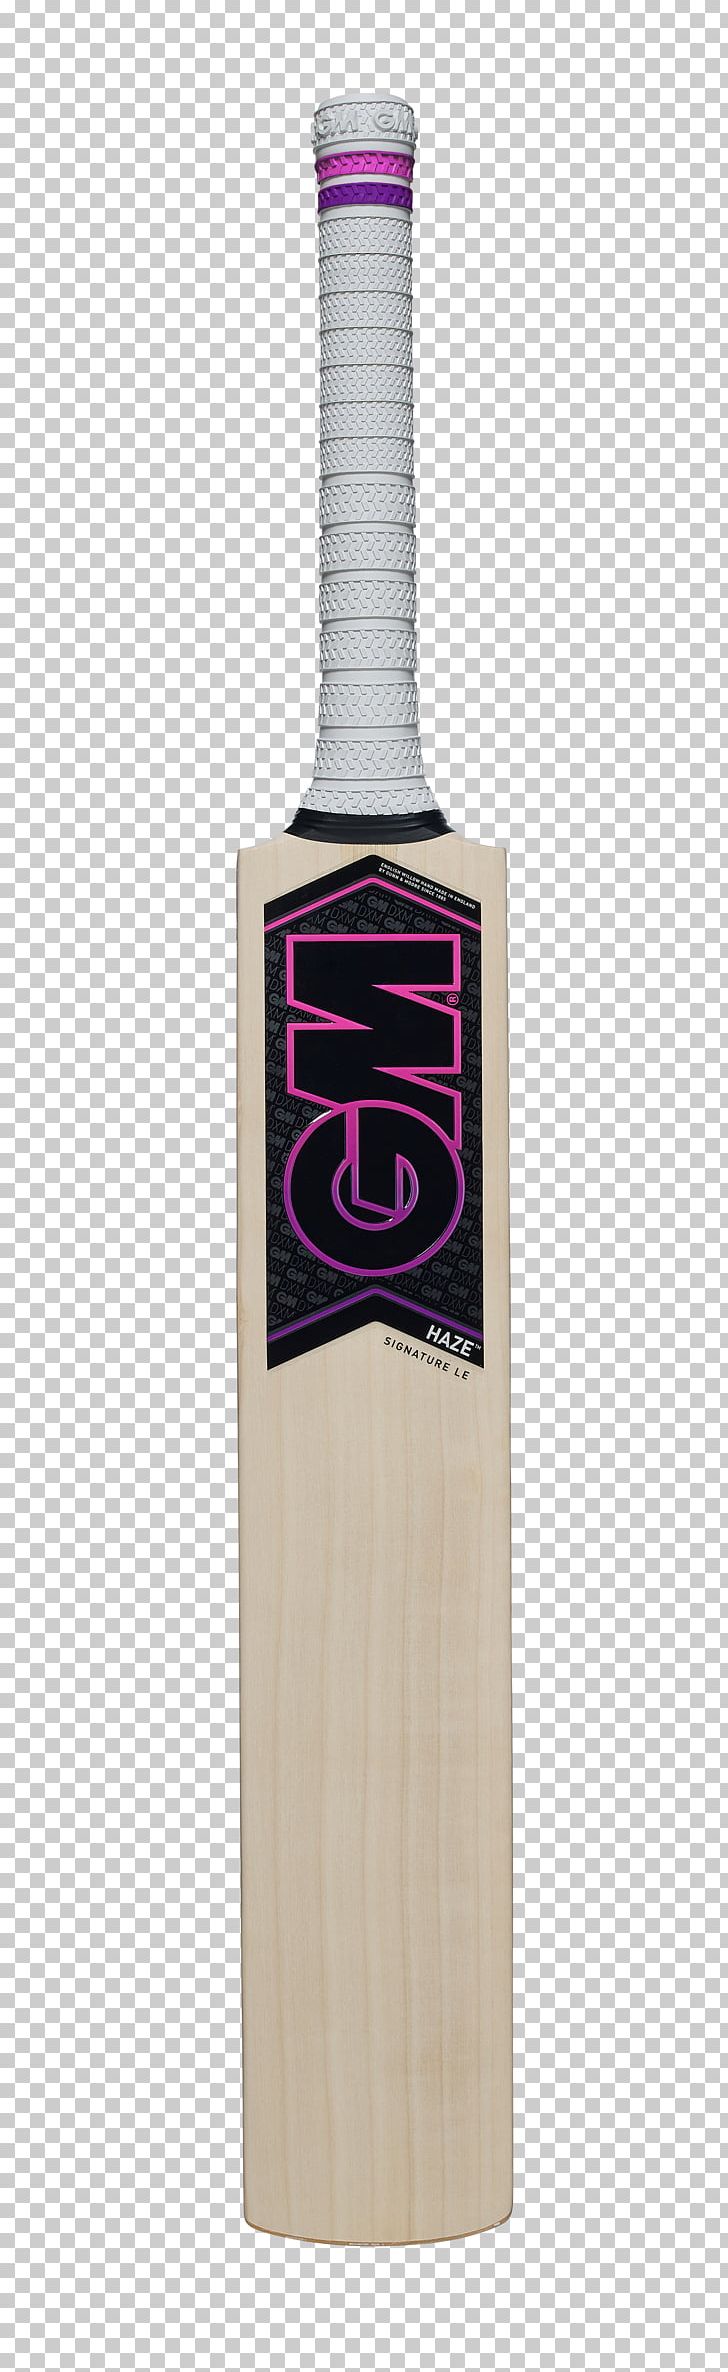 Cricket Bats Batting Gunn & Moore England PNG, Clipart, Bat, Batting, Bottle, Cricket, Cricket Bat Free PNG Download